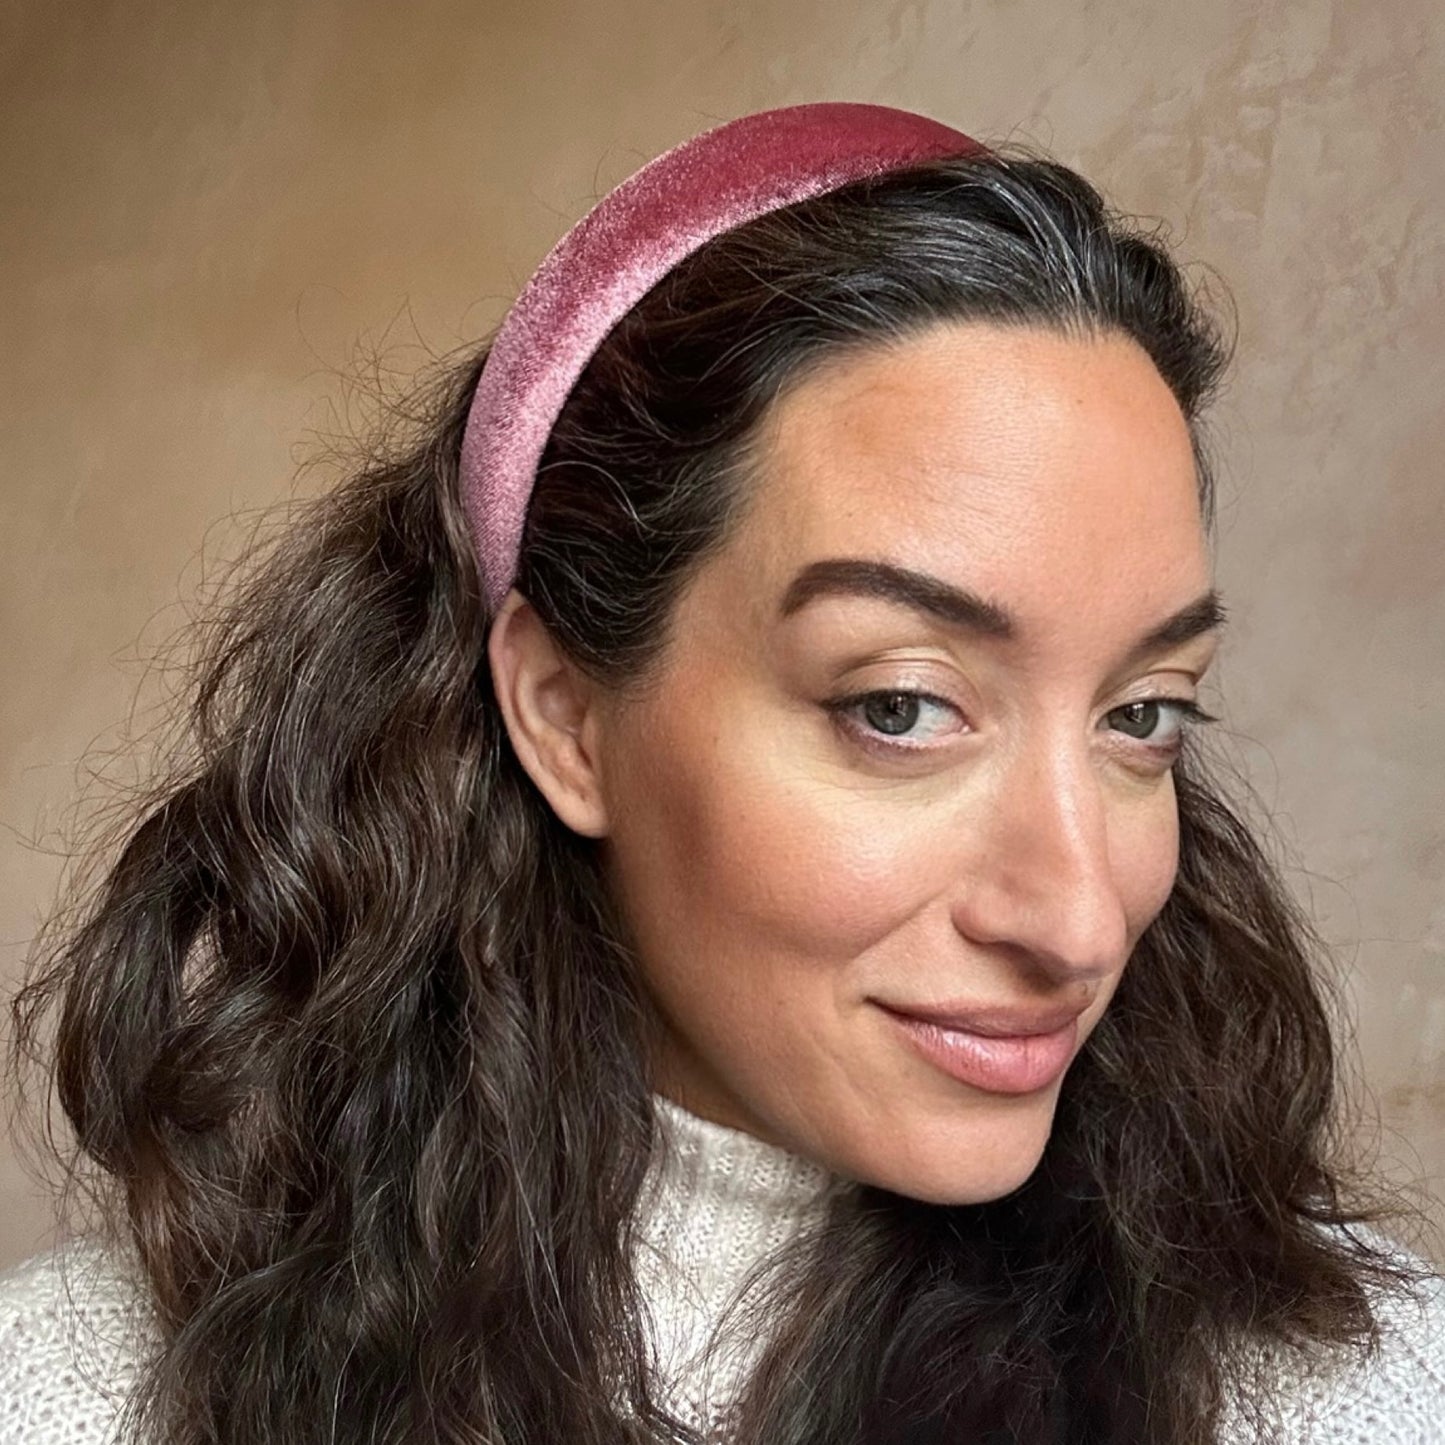 'Audrey' Velvet Headband in Mauve Pink